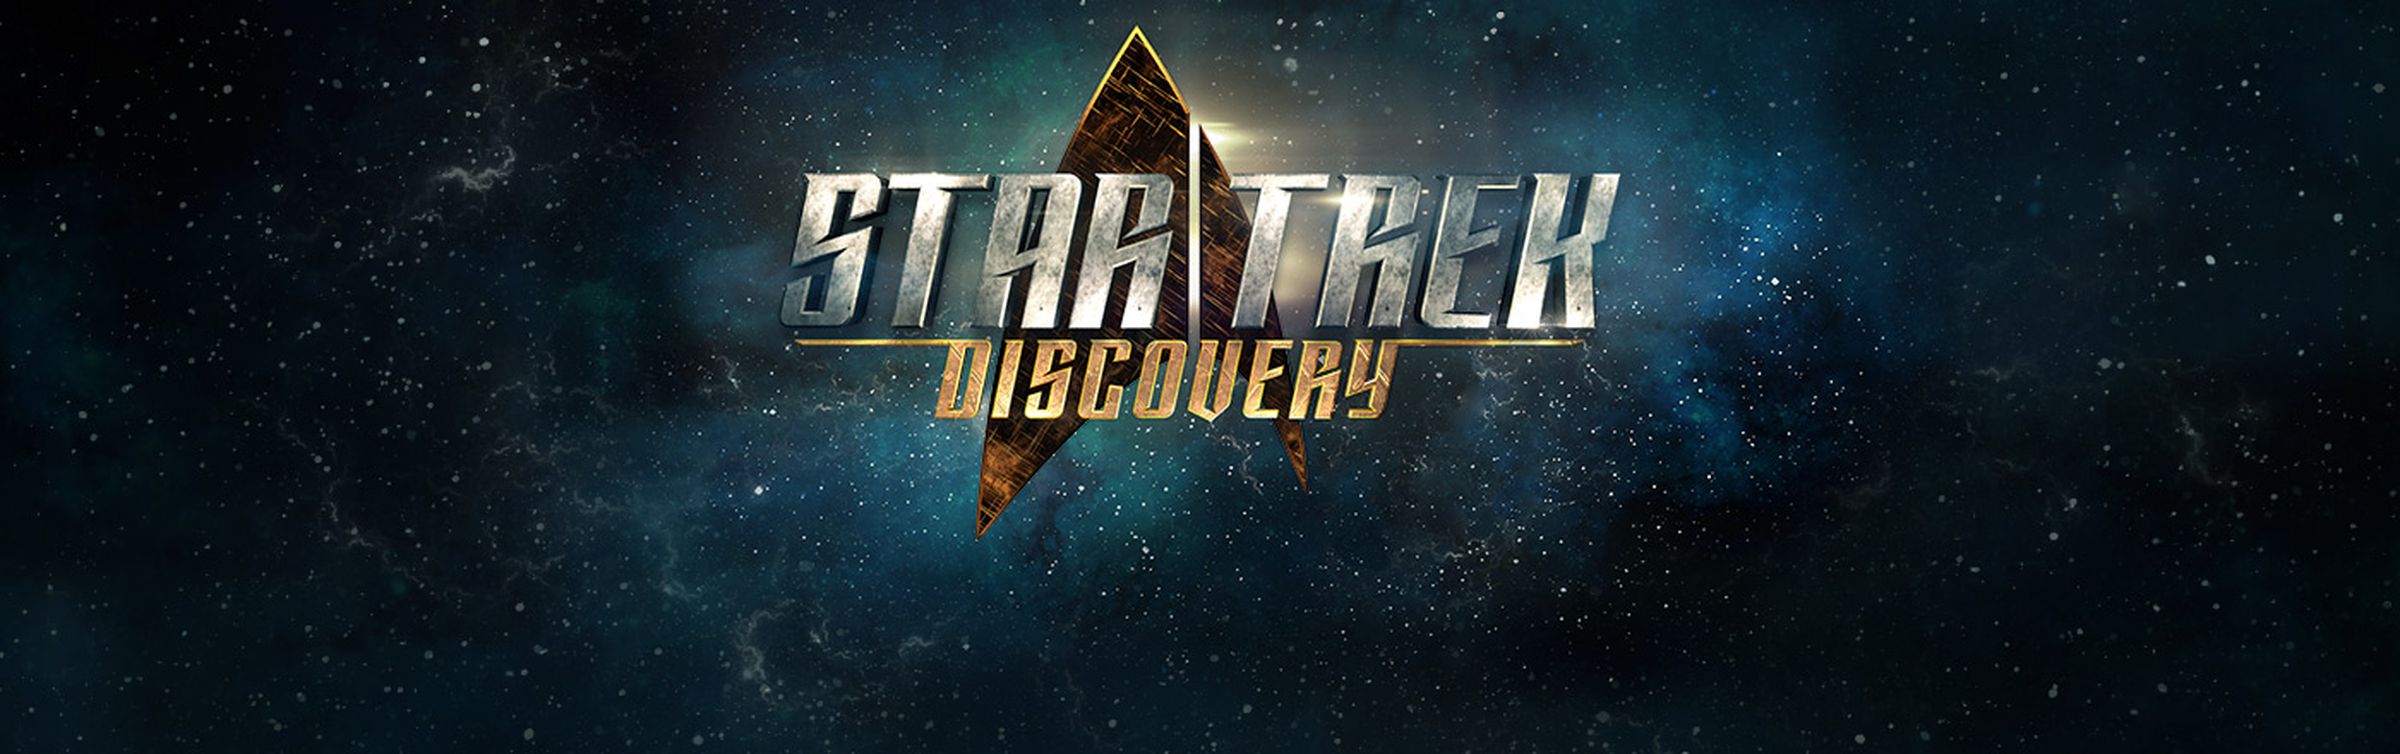 star trek discovery logo-news-CBS